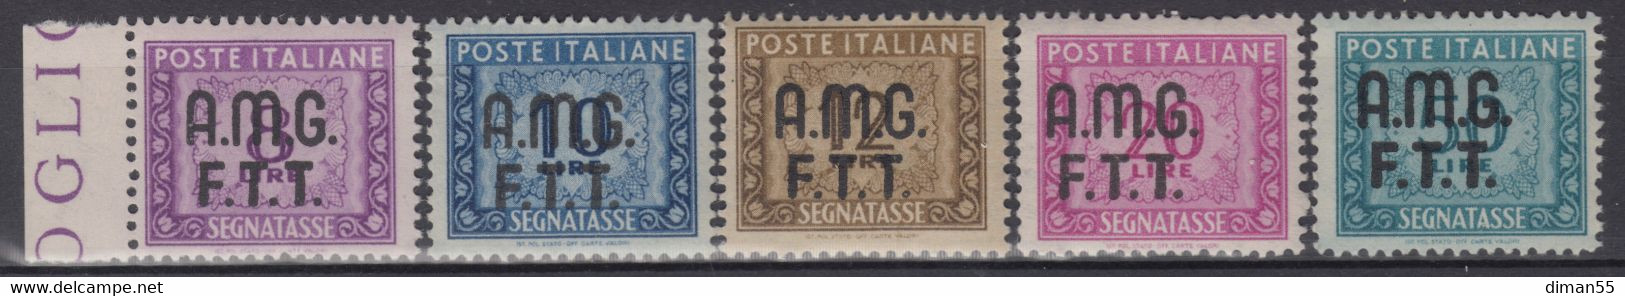 Trieste Zona A - AMG-FTT - Segnatasse n.5-15 - 1250 Euro - Gomma integra MNH** varietà di soprastampe non considerate